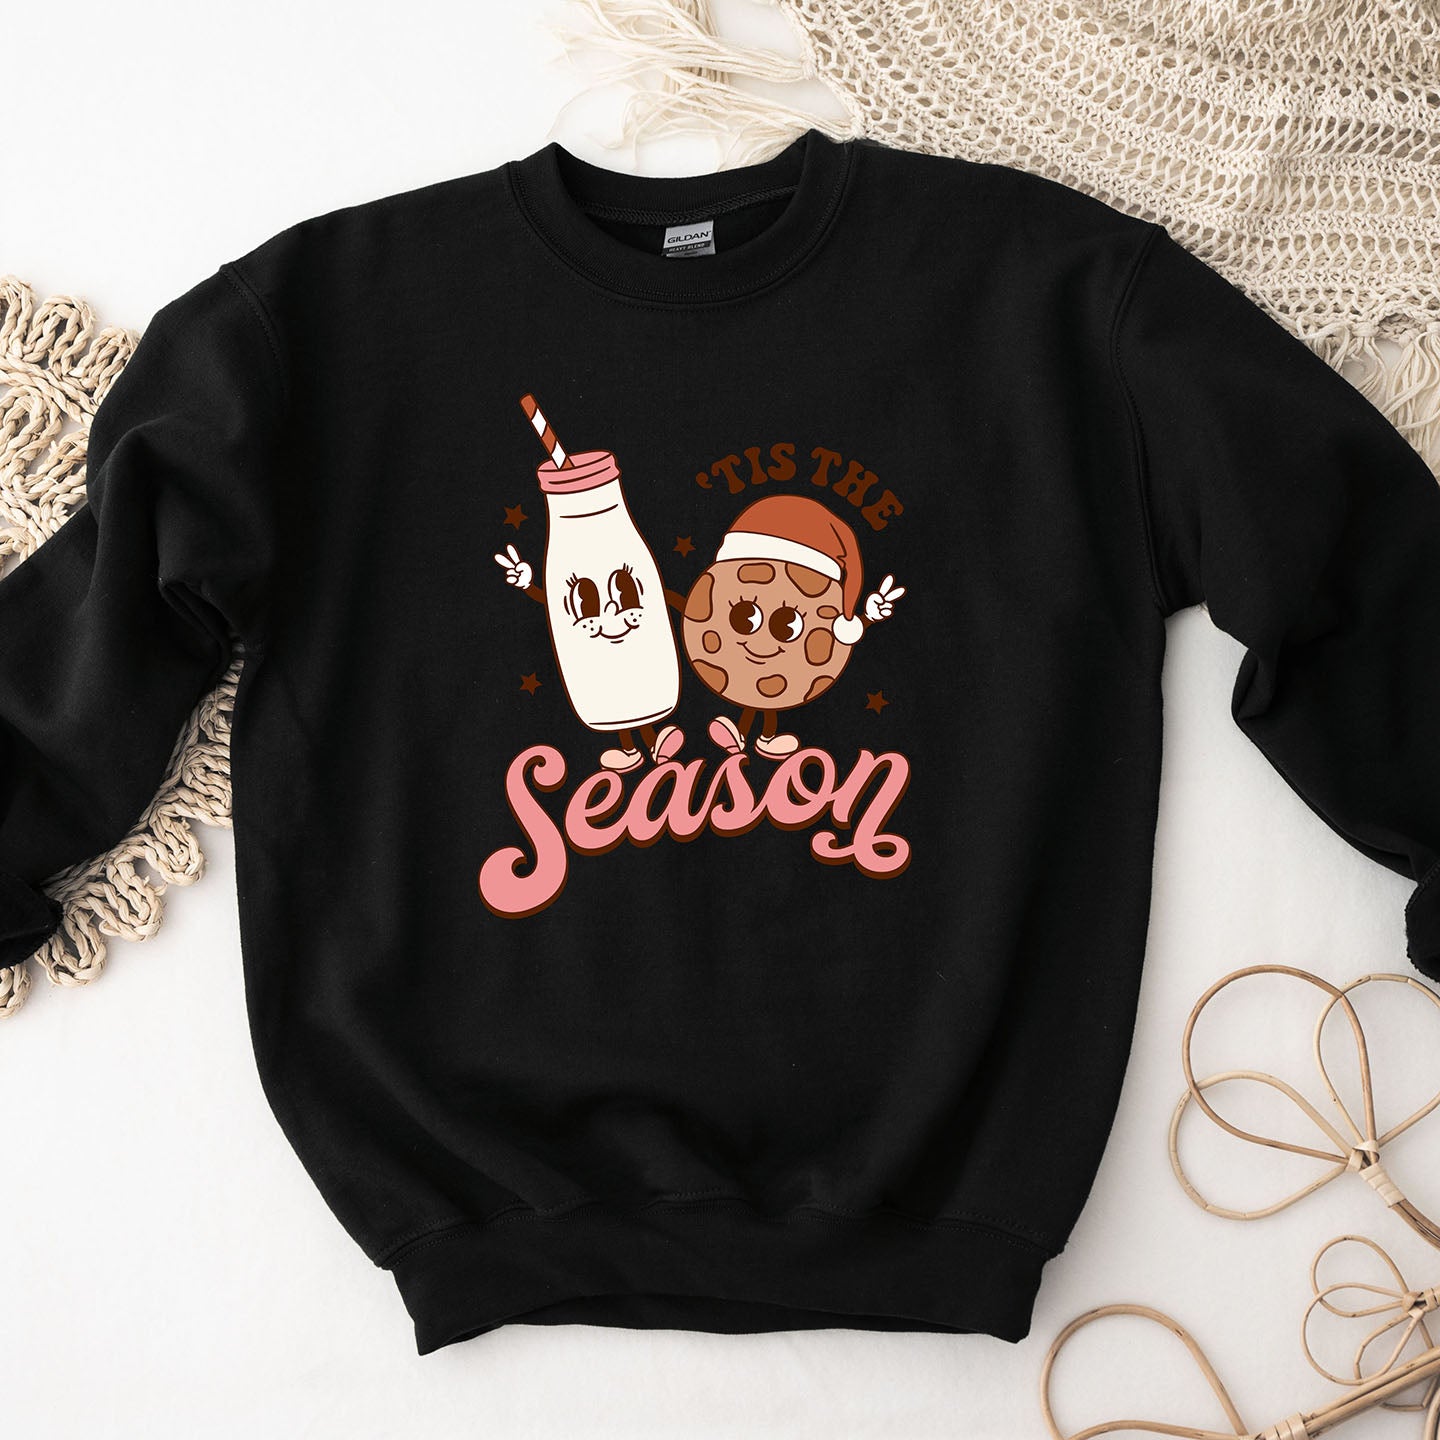 Tis The Season (Milk and Cookies) Sweatshirt